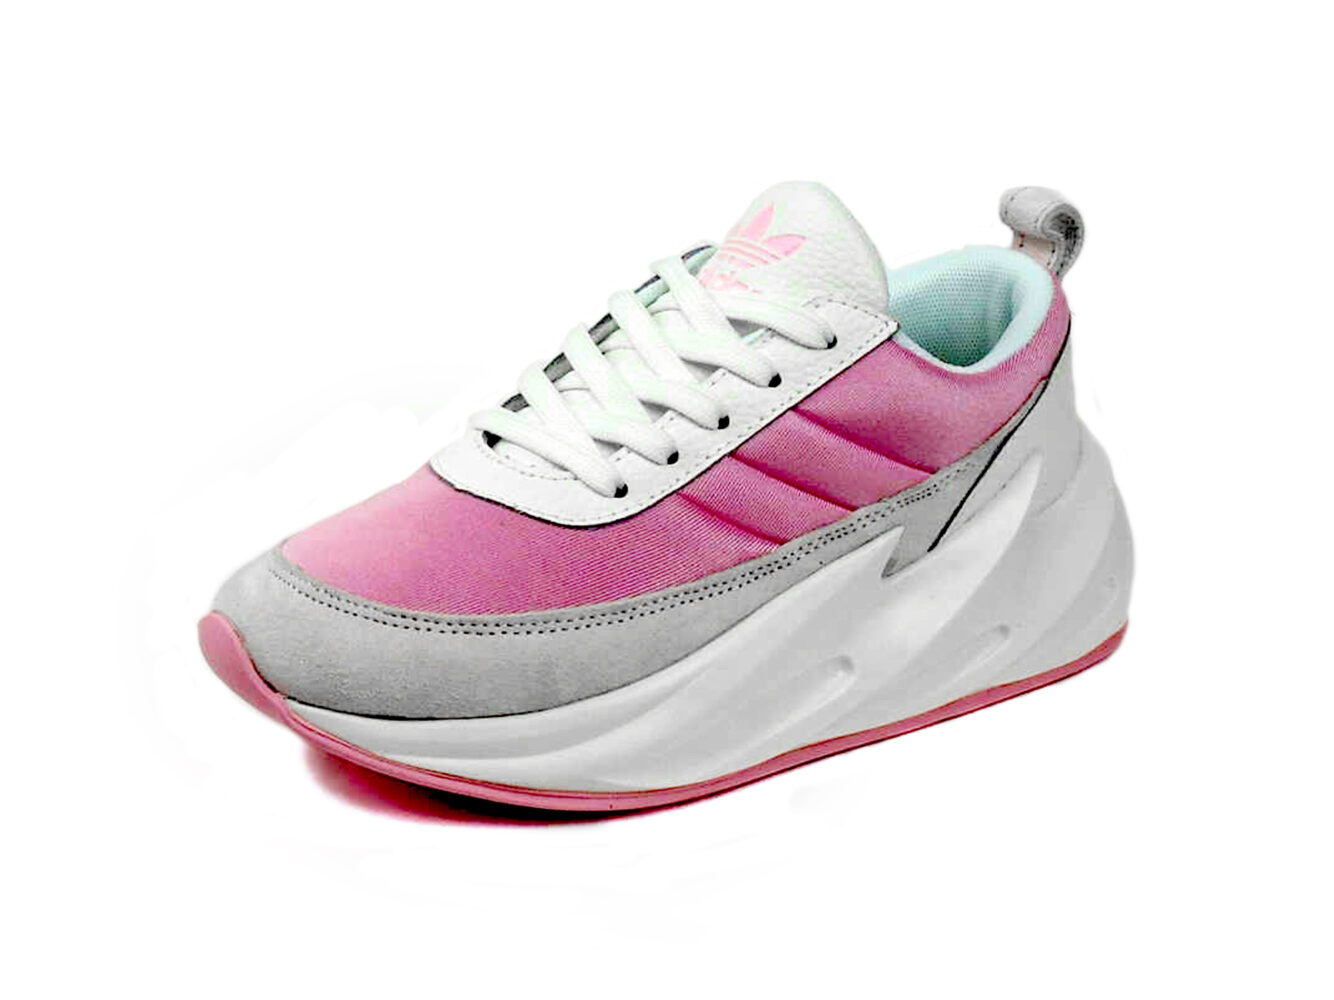 adidas sharks concept boost pink f33866 купить